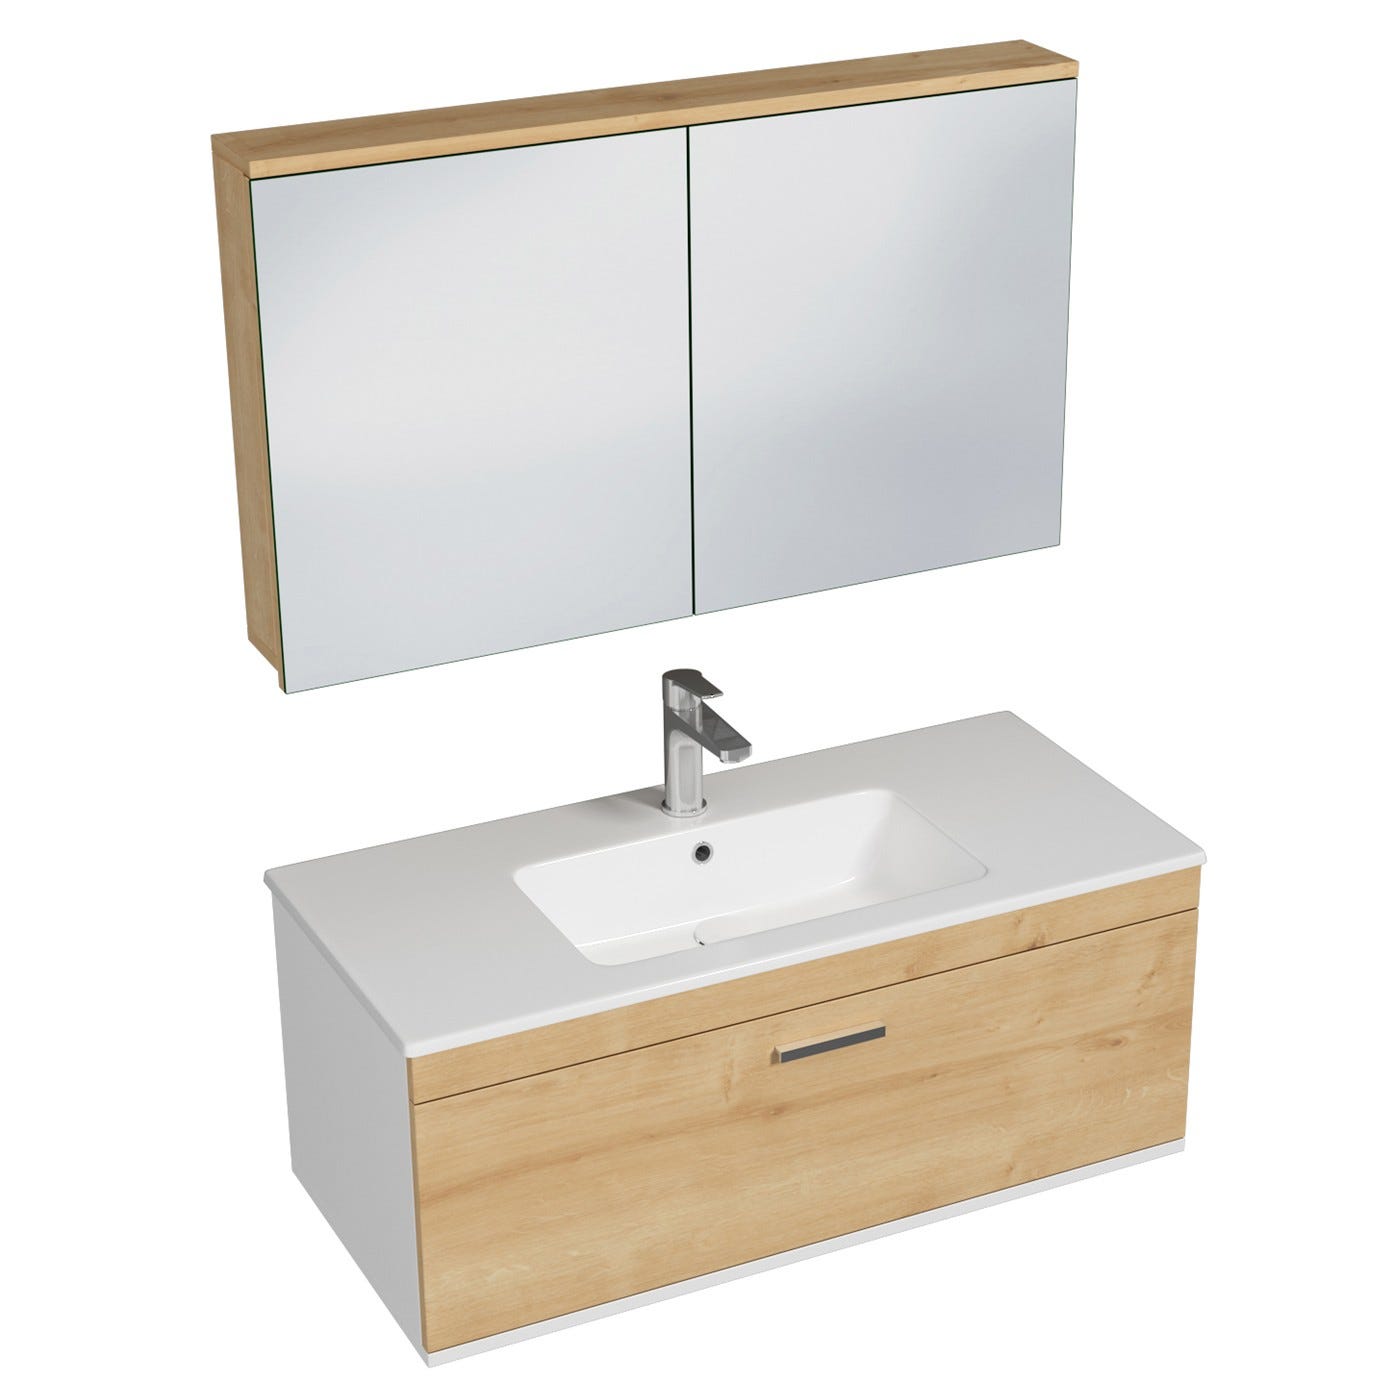 RUBITE Meuble salle de bain simple vasque 1 tiroir chêne clair largeur 100 cm + miroir armoire 0